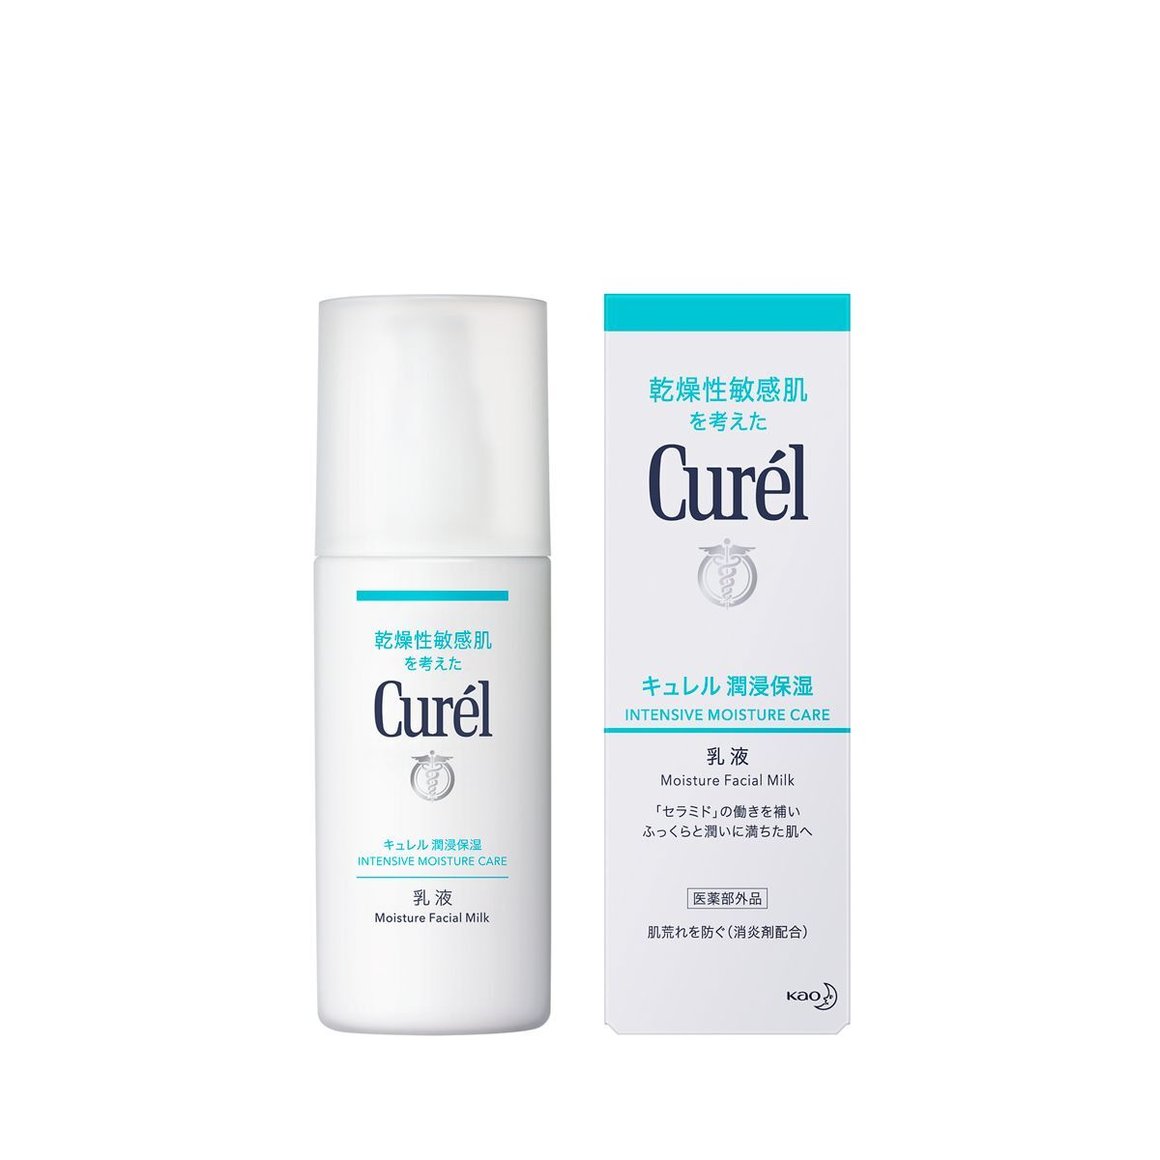 Curel珂润润浸保湿干燥敏感肌乳液 120ml商品描述